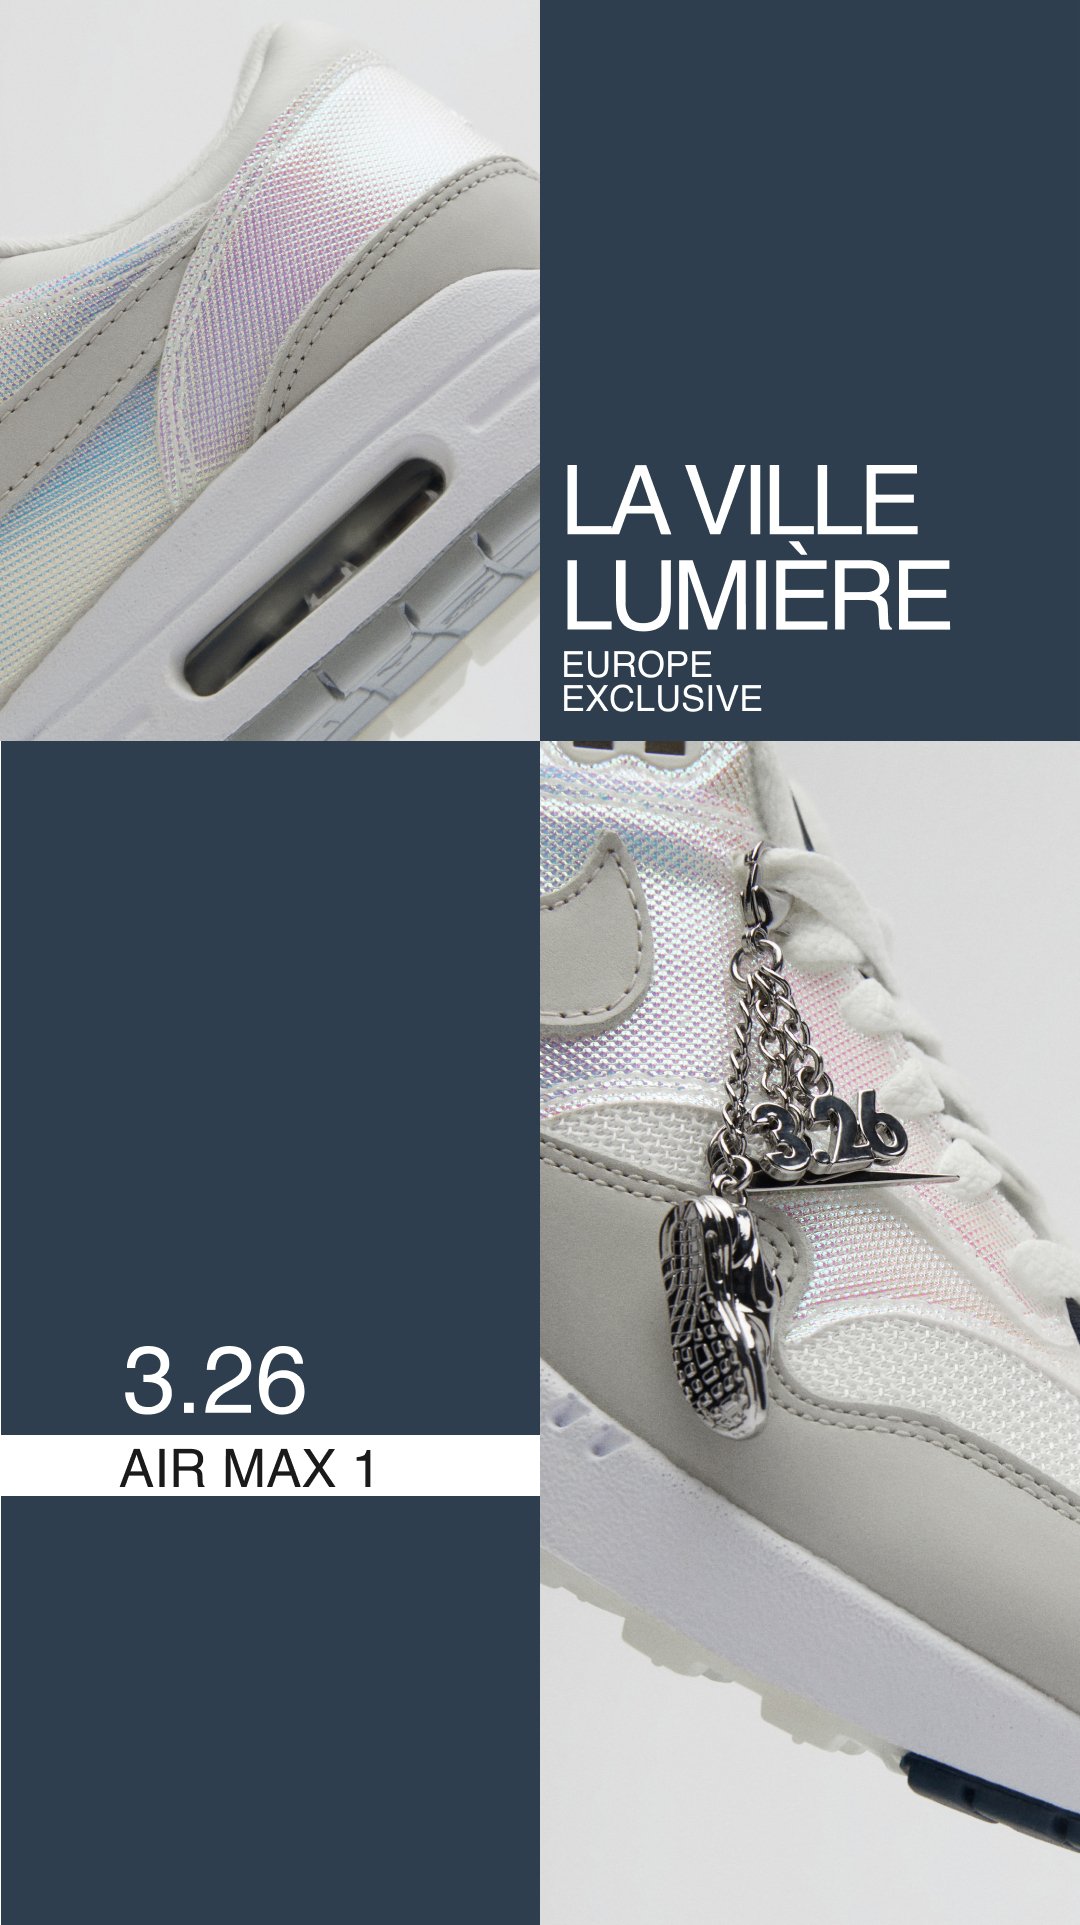 Nike Air Max 1 La Ville Lumiere Release Date